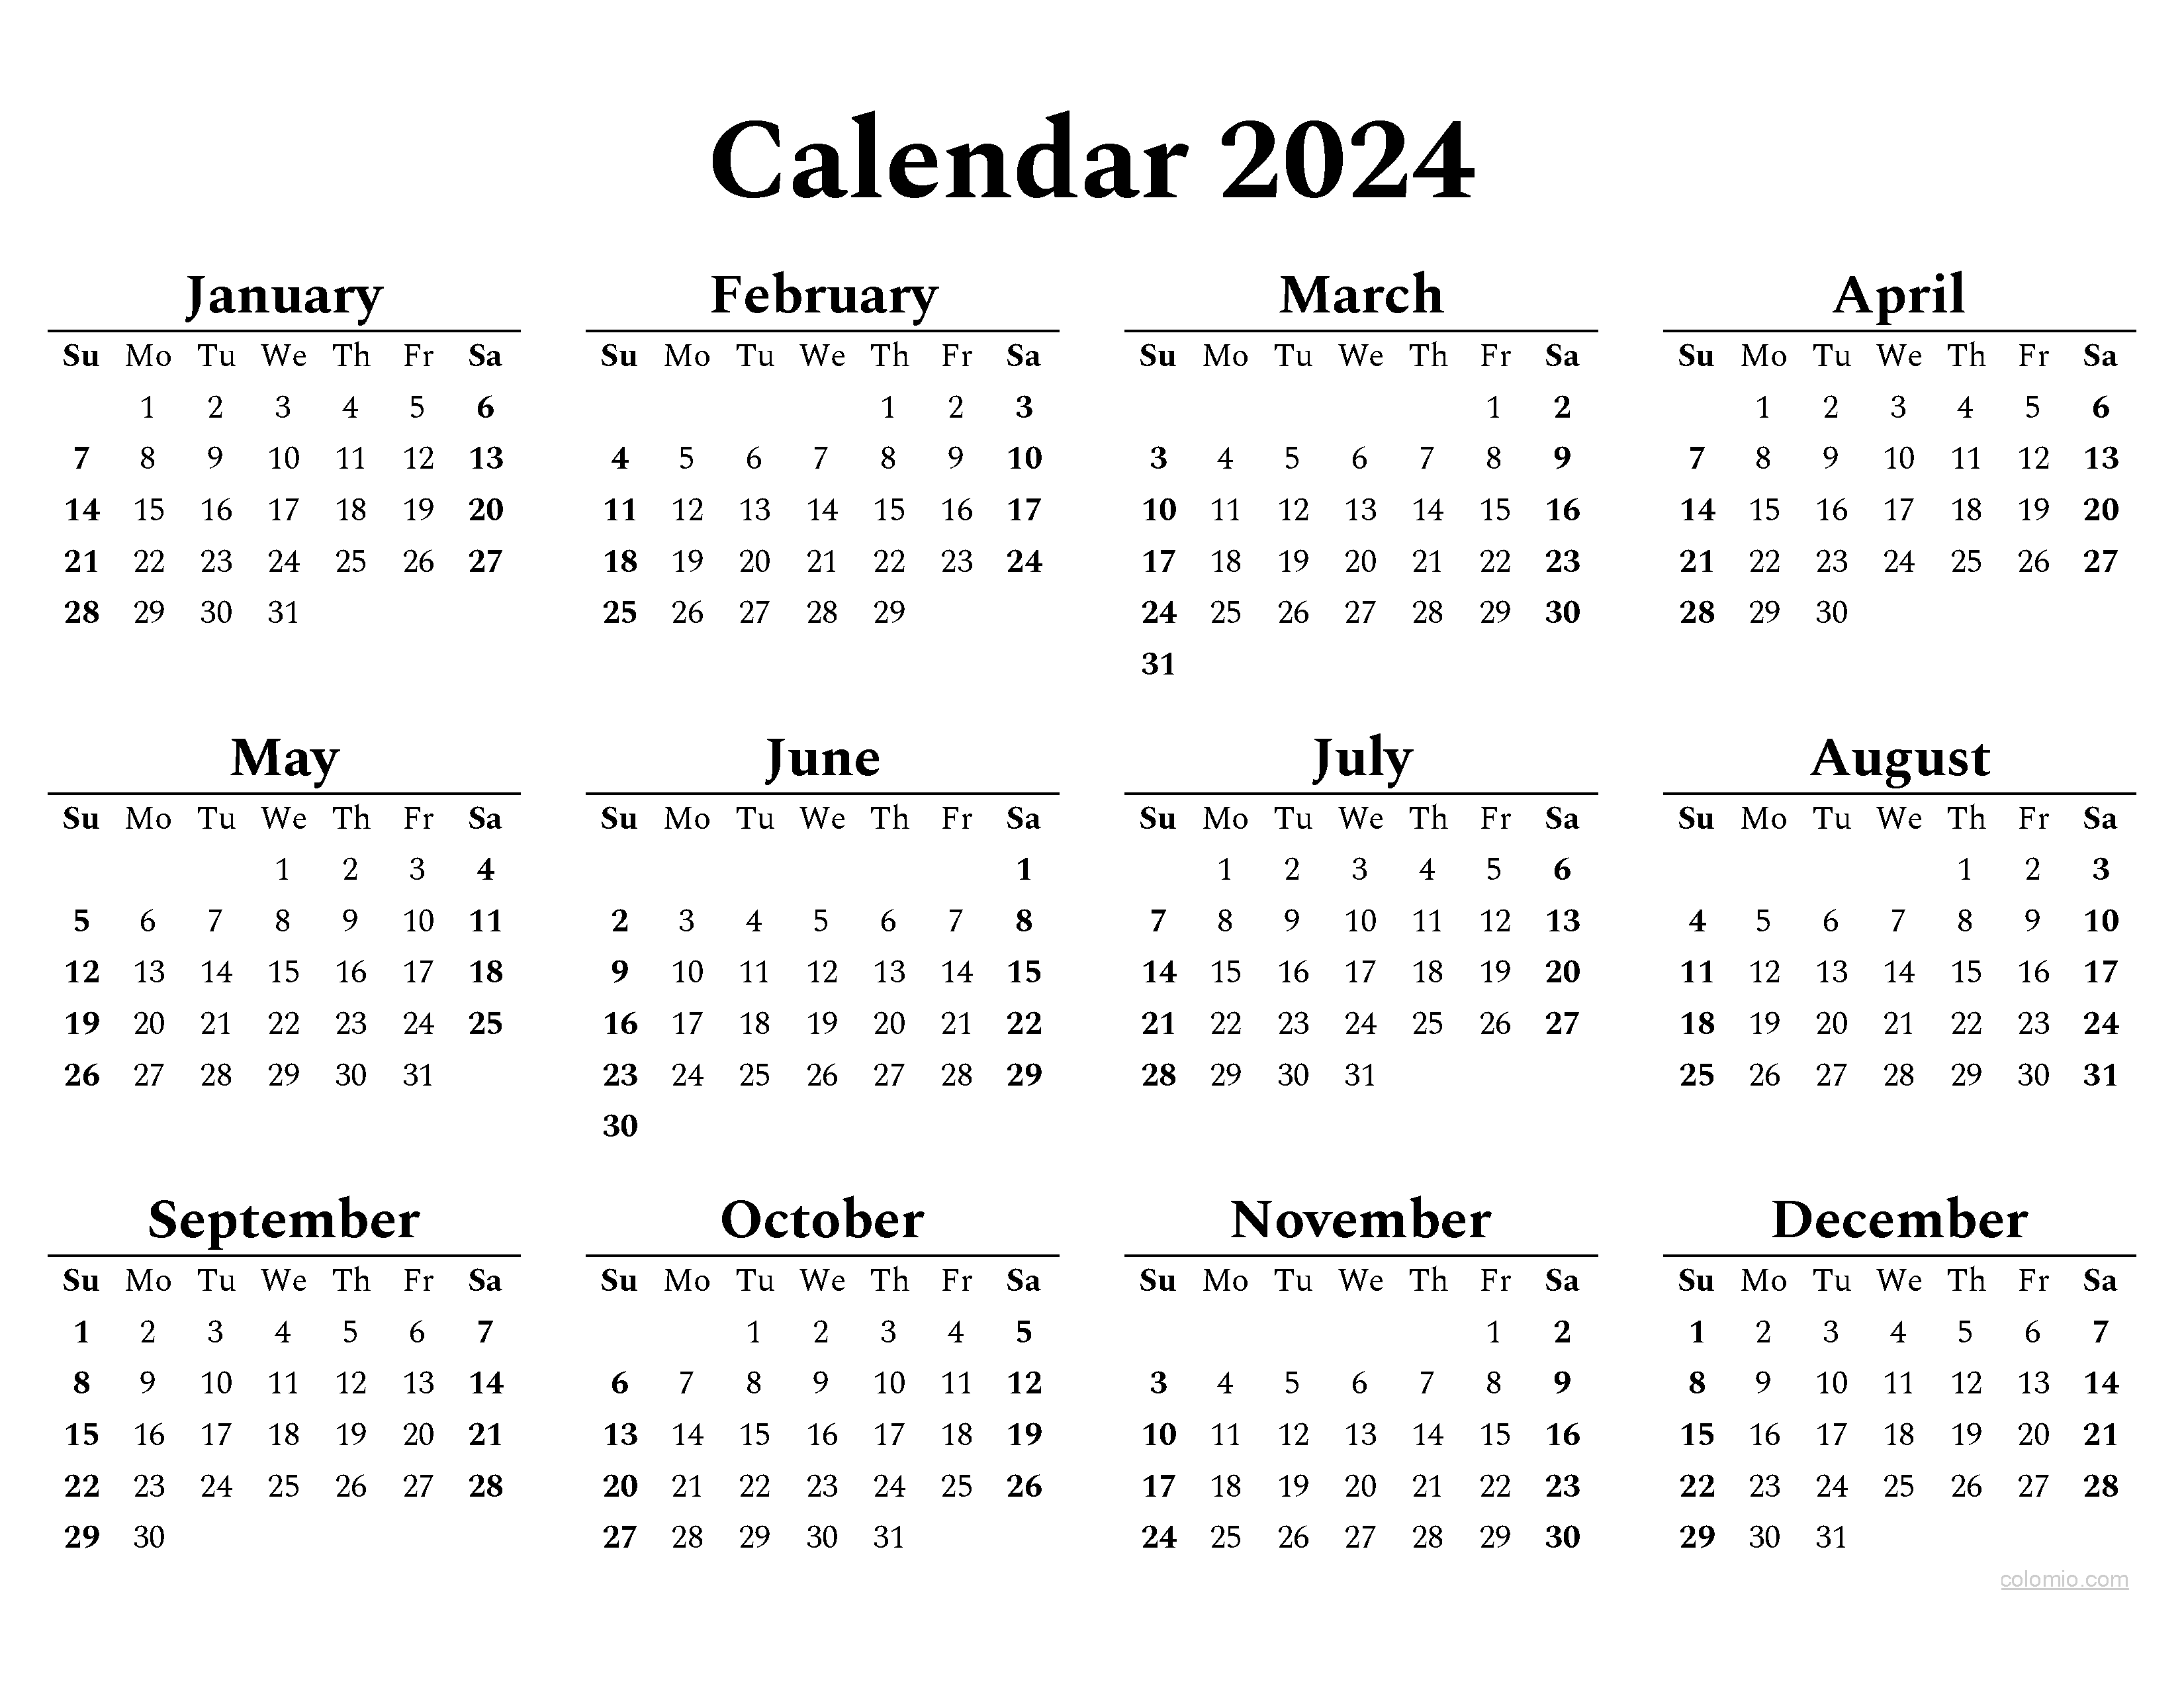 Calendar 2024 Template Pdf Fina Orelle - Free Printable 2024 Calendar With Previous And Next Month Shown